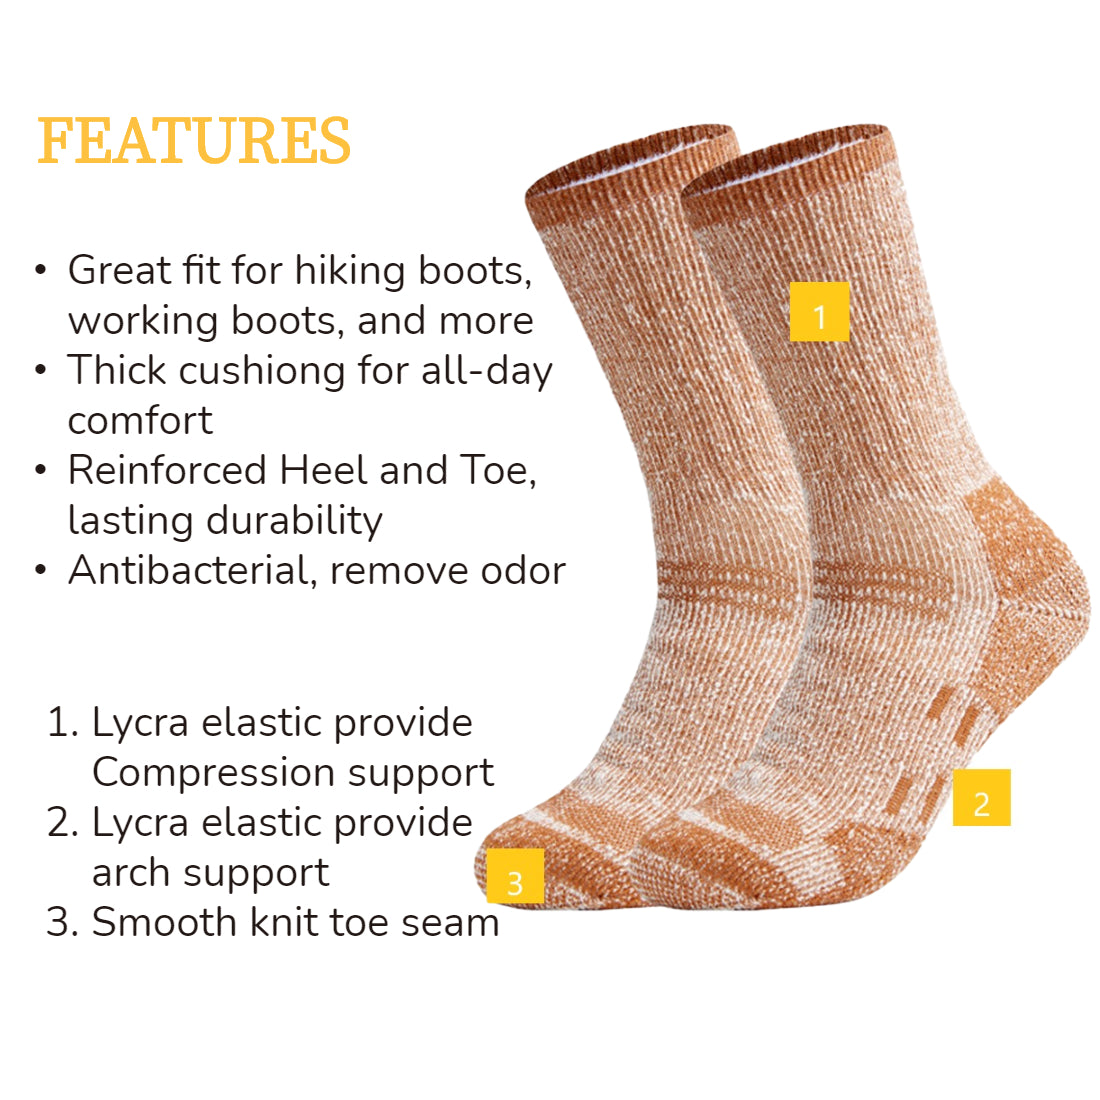 SOLAX 2 pairs Merino wool-blend socks